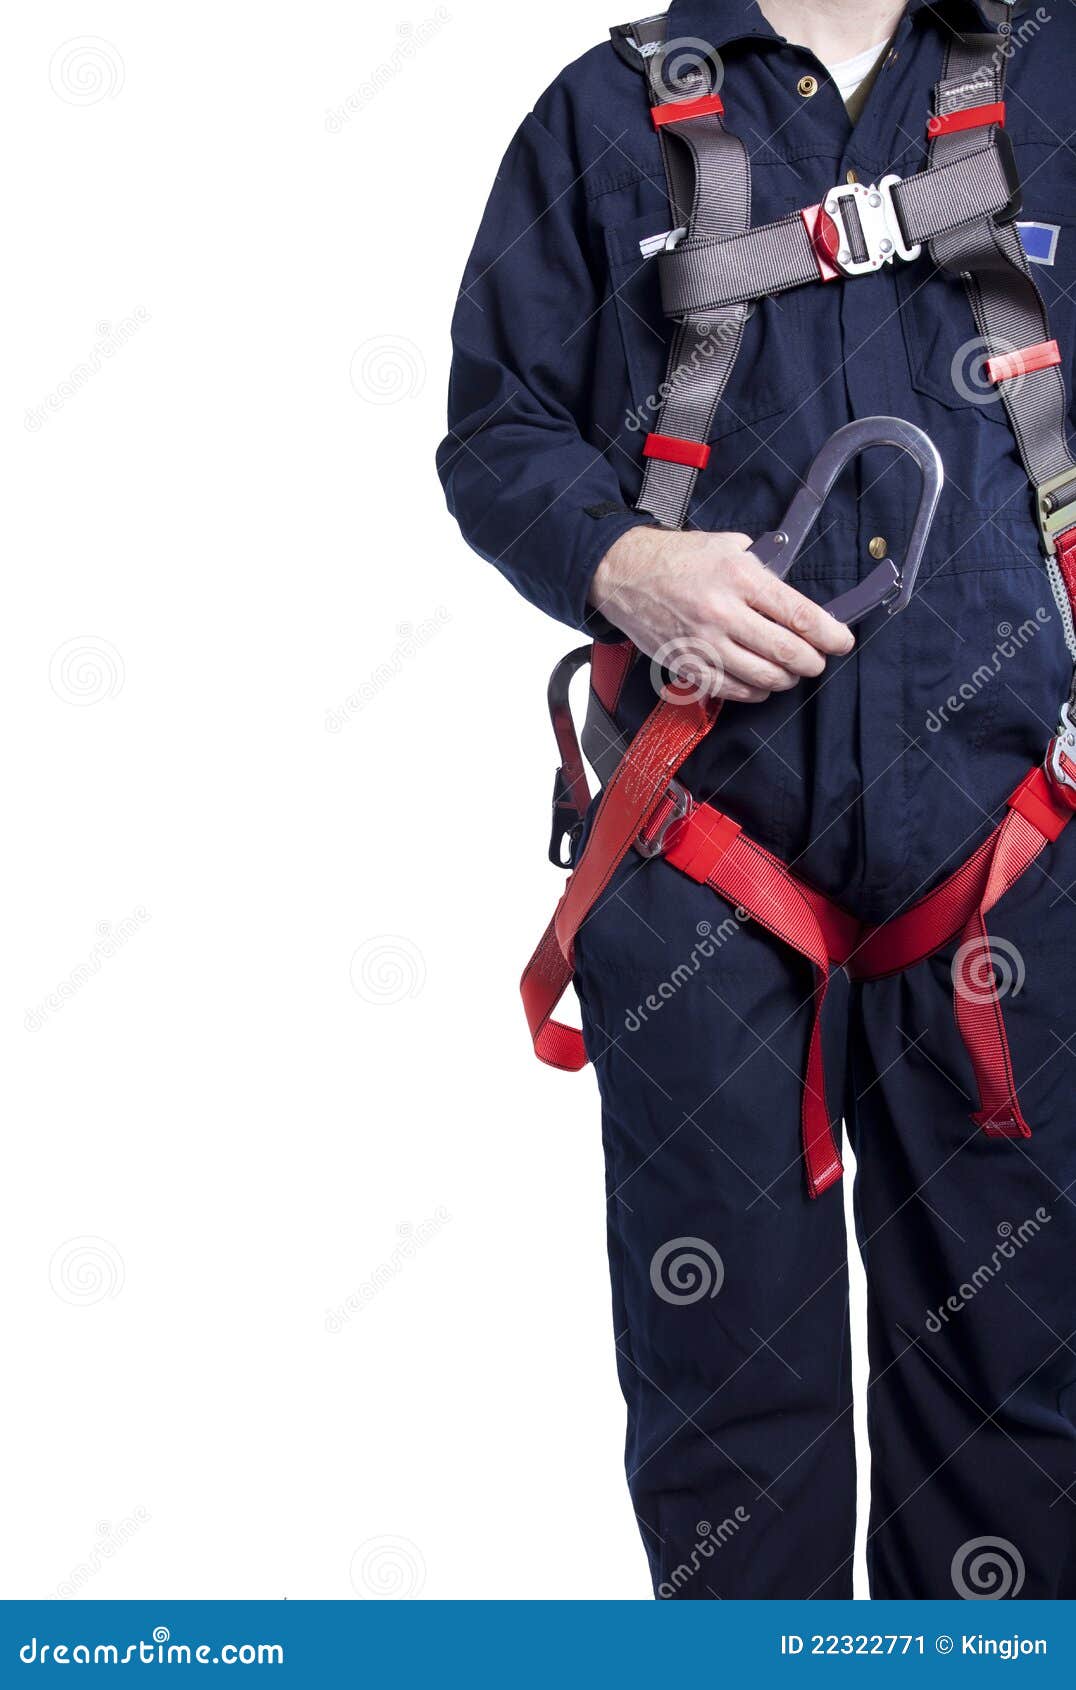 man wearing fall protection